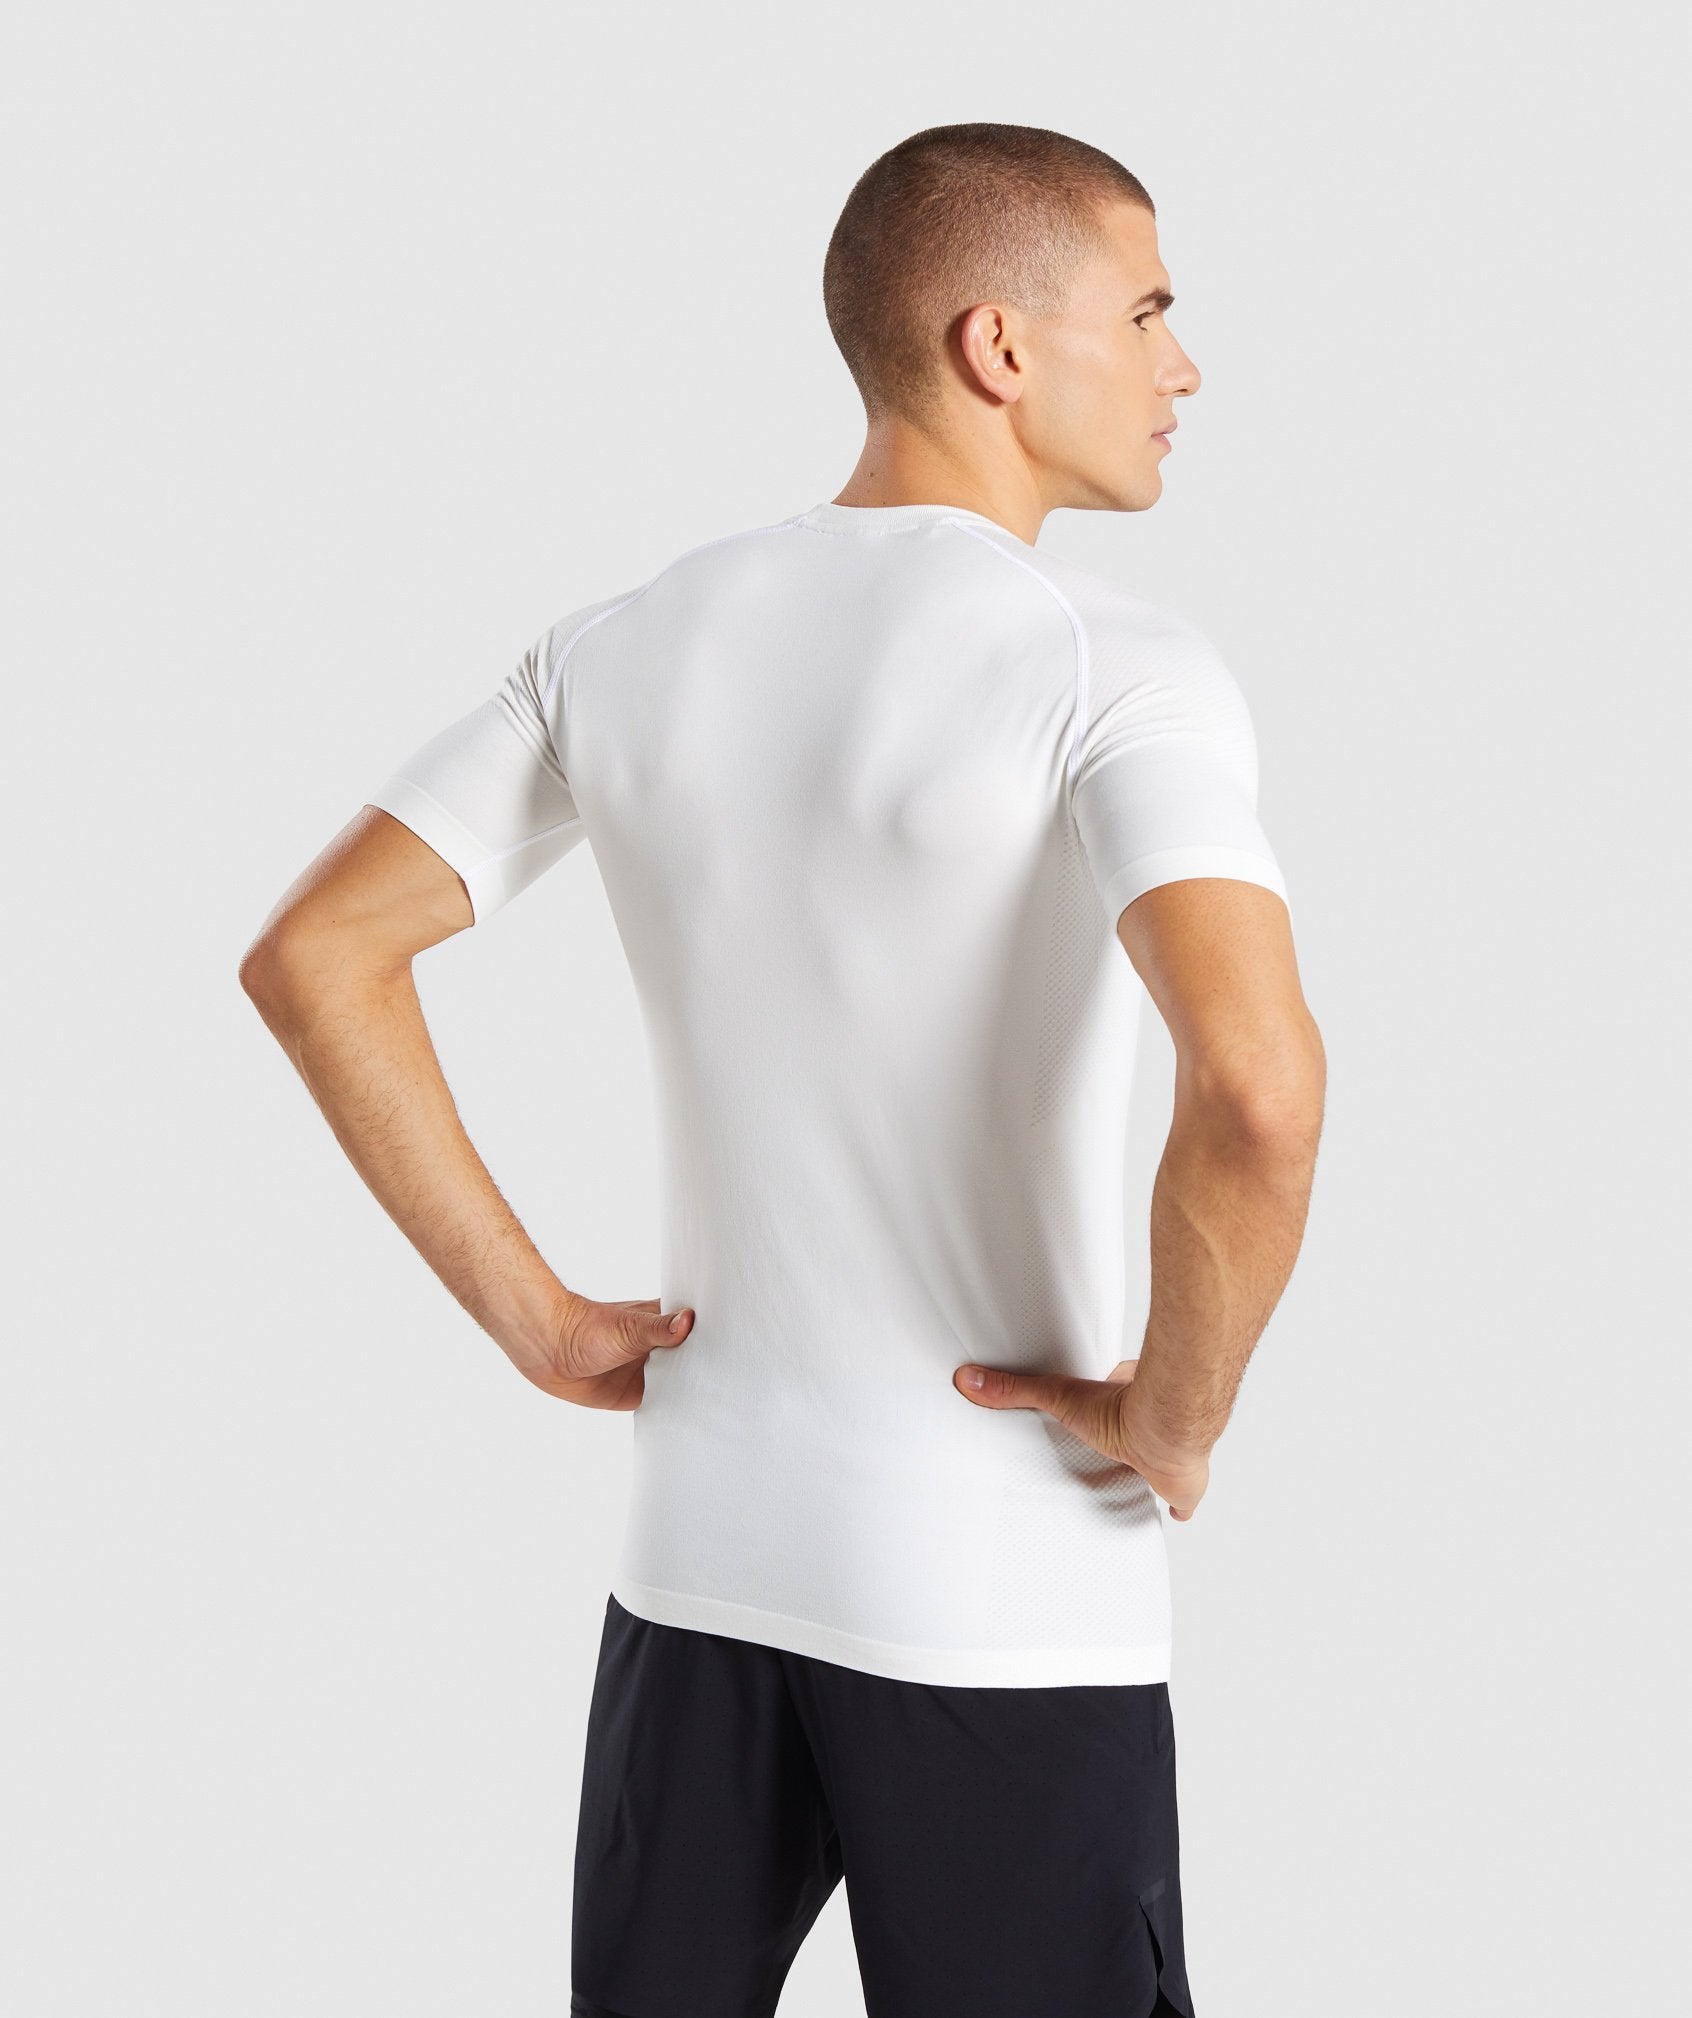 Define Seamless T-Shirt in White